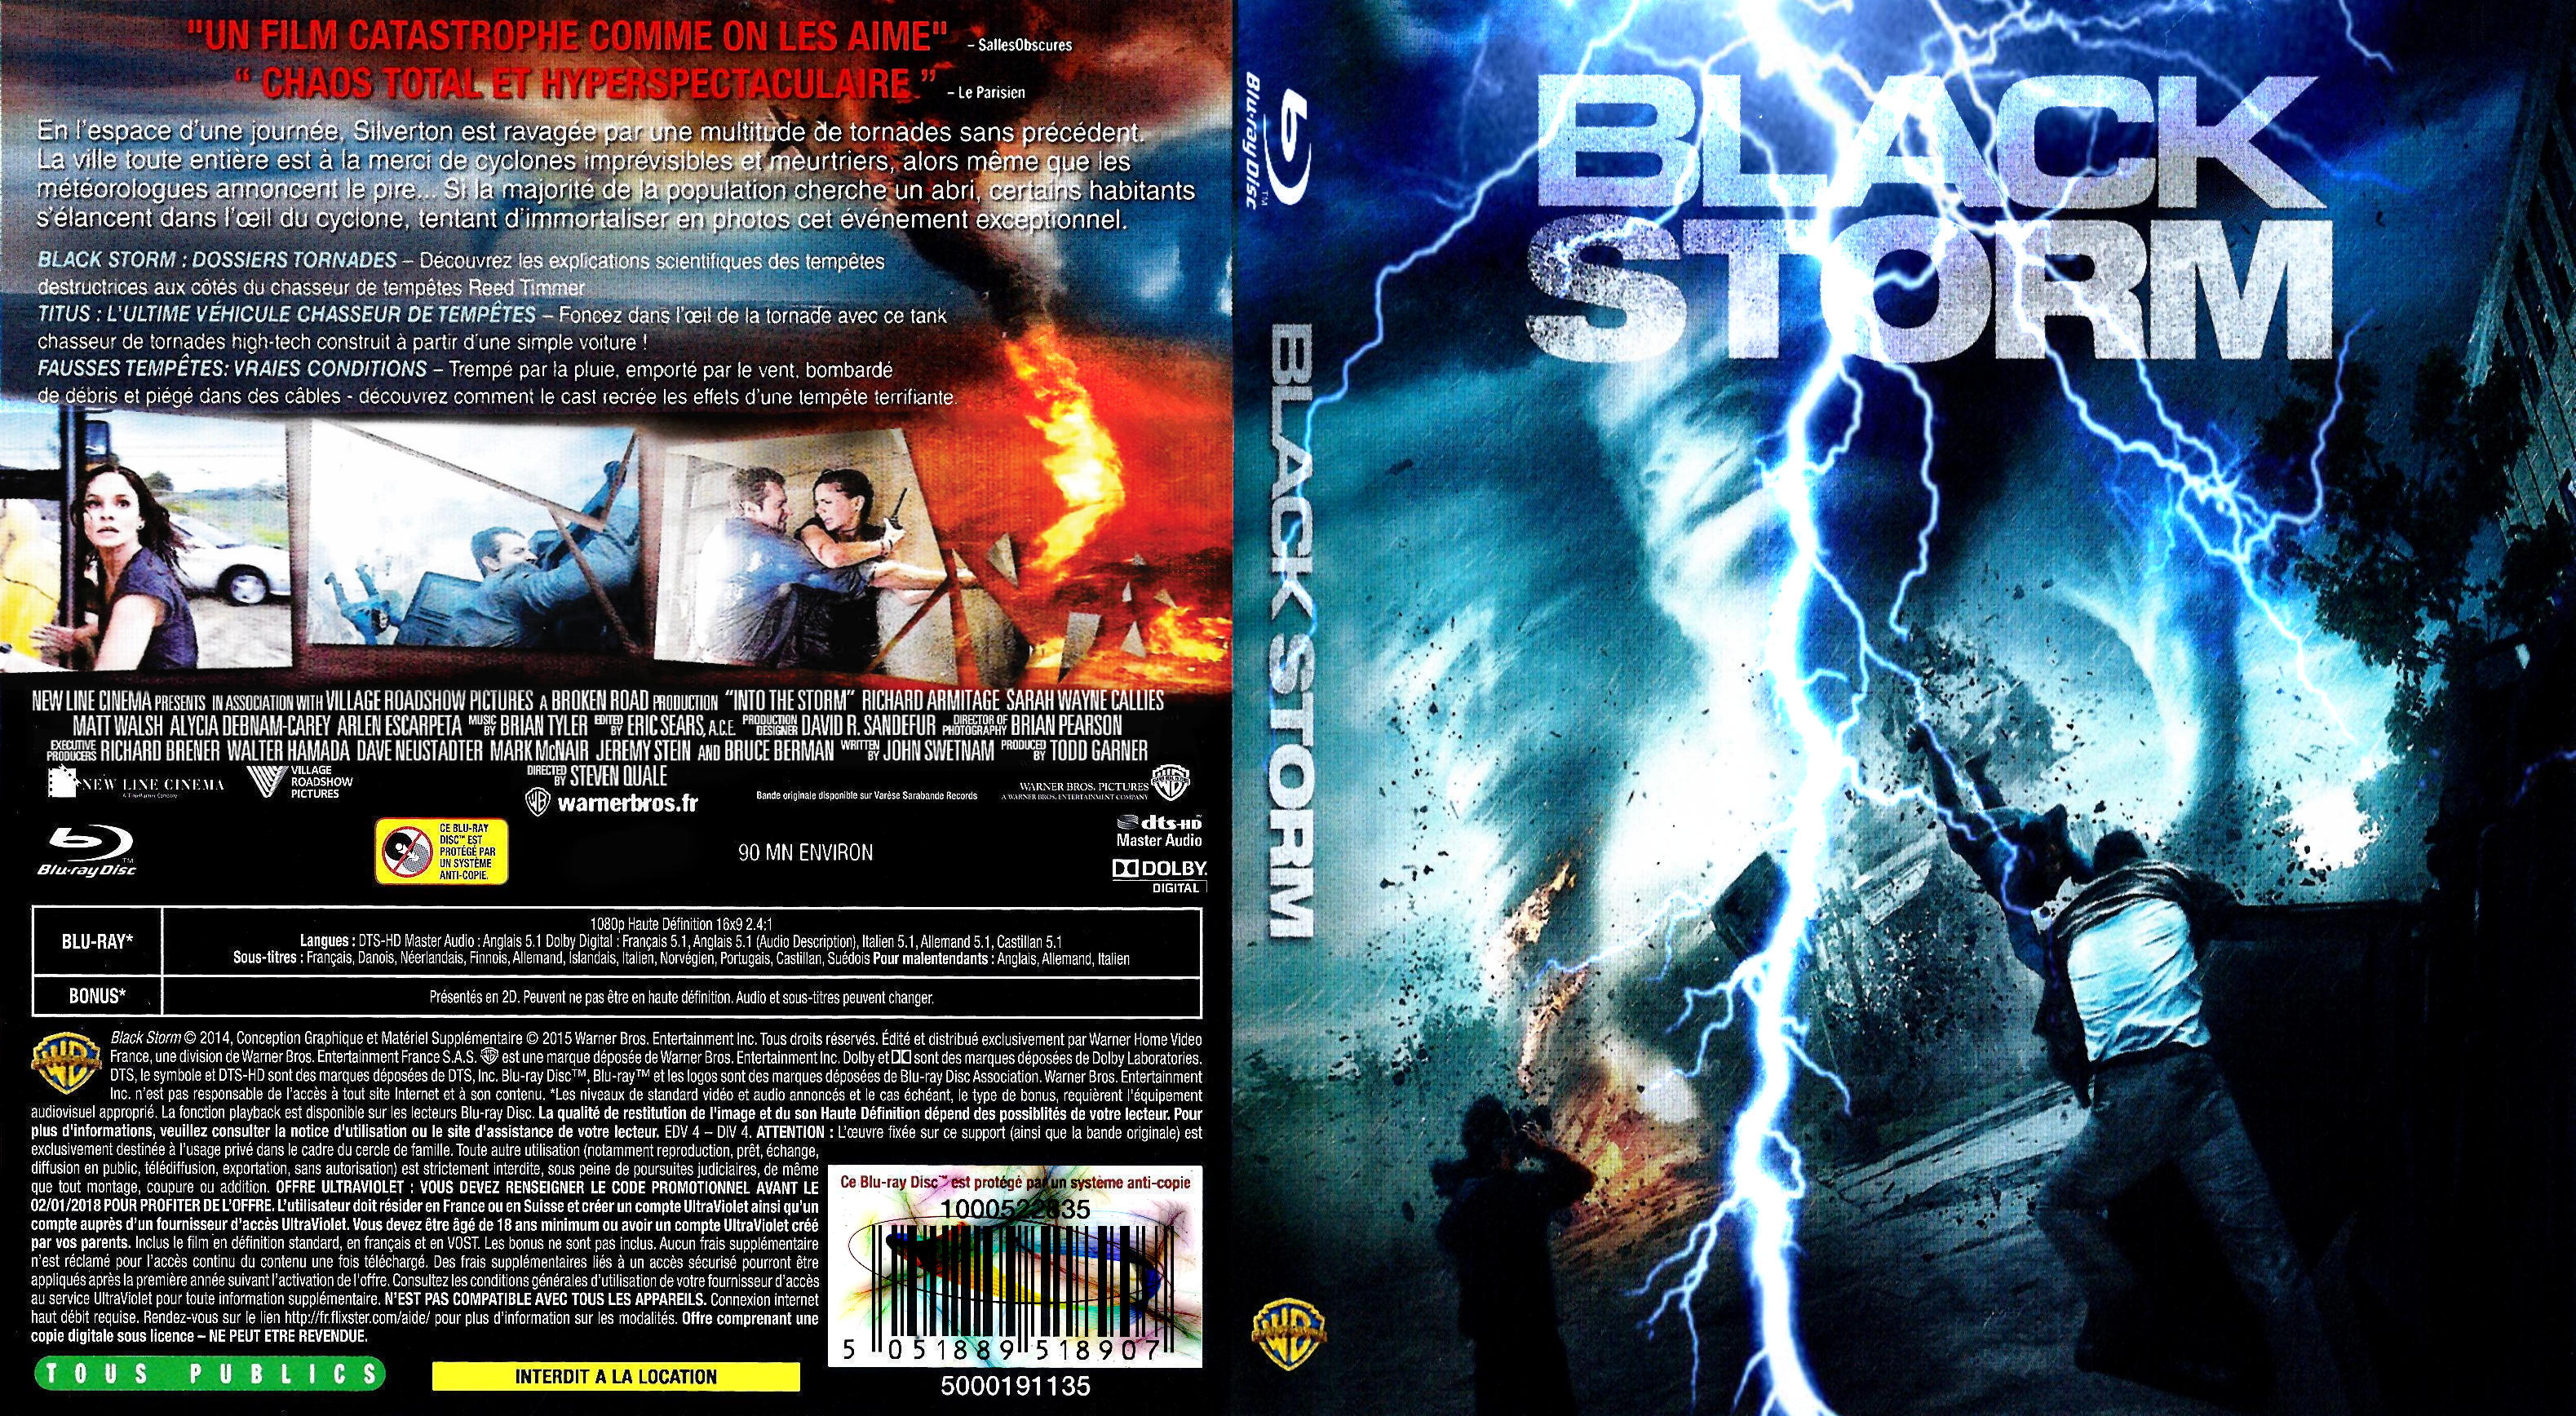 Jaquette DVD Black storm custom (BLU-RAY) v2